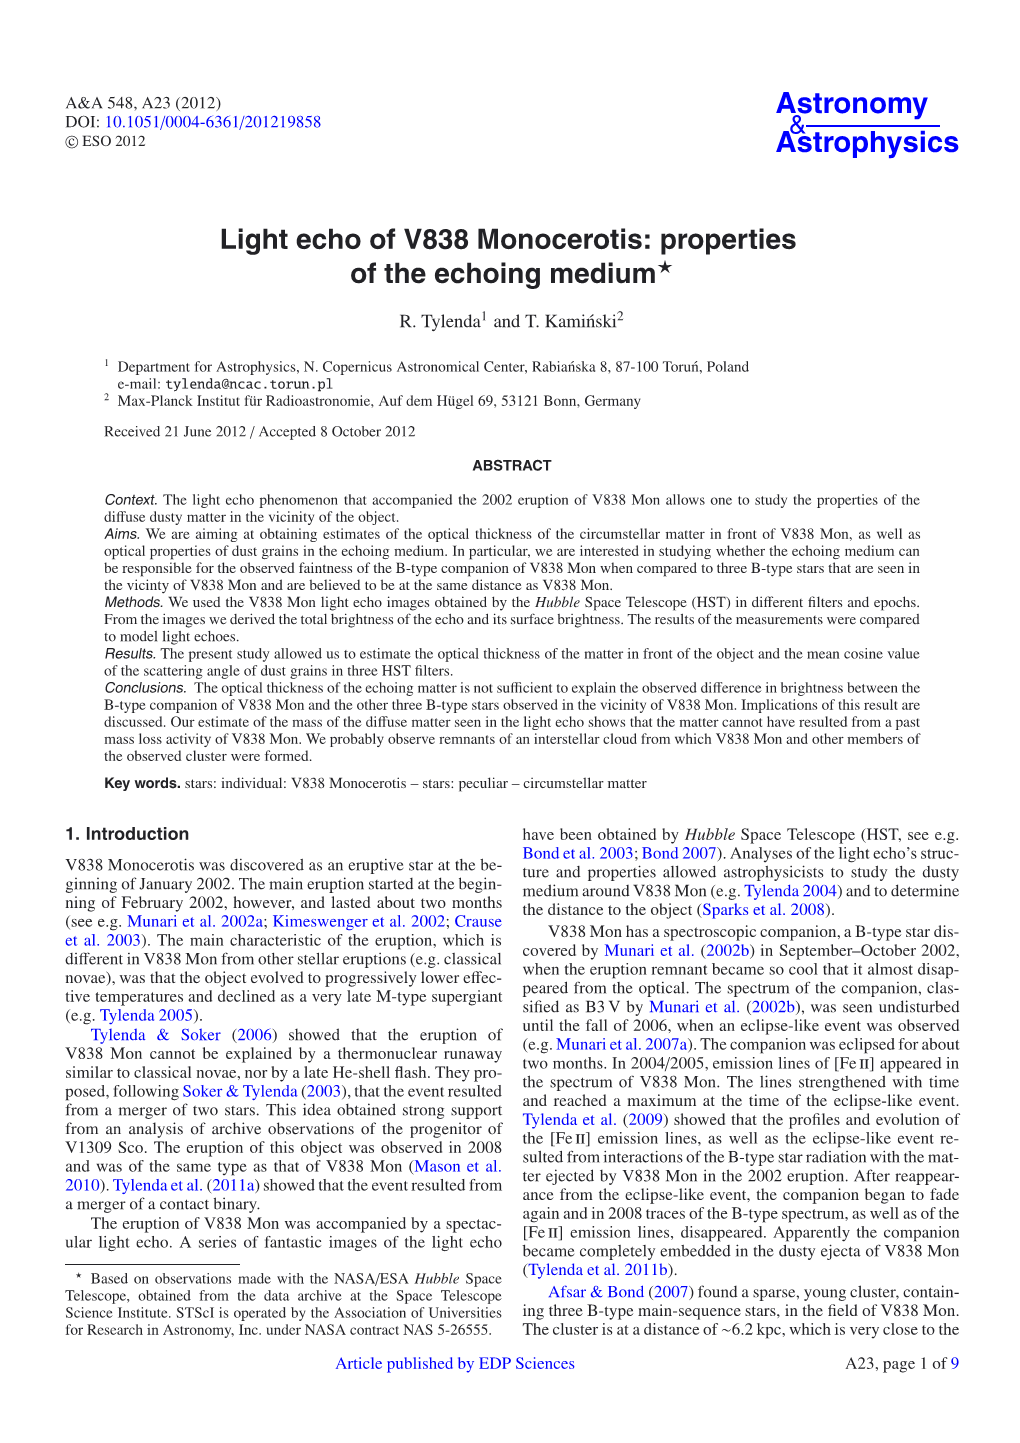 Light Echo of V838 Monocerotis: Properties of the Echoing Medium